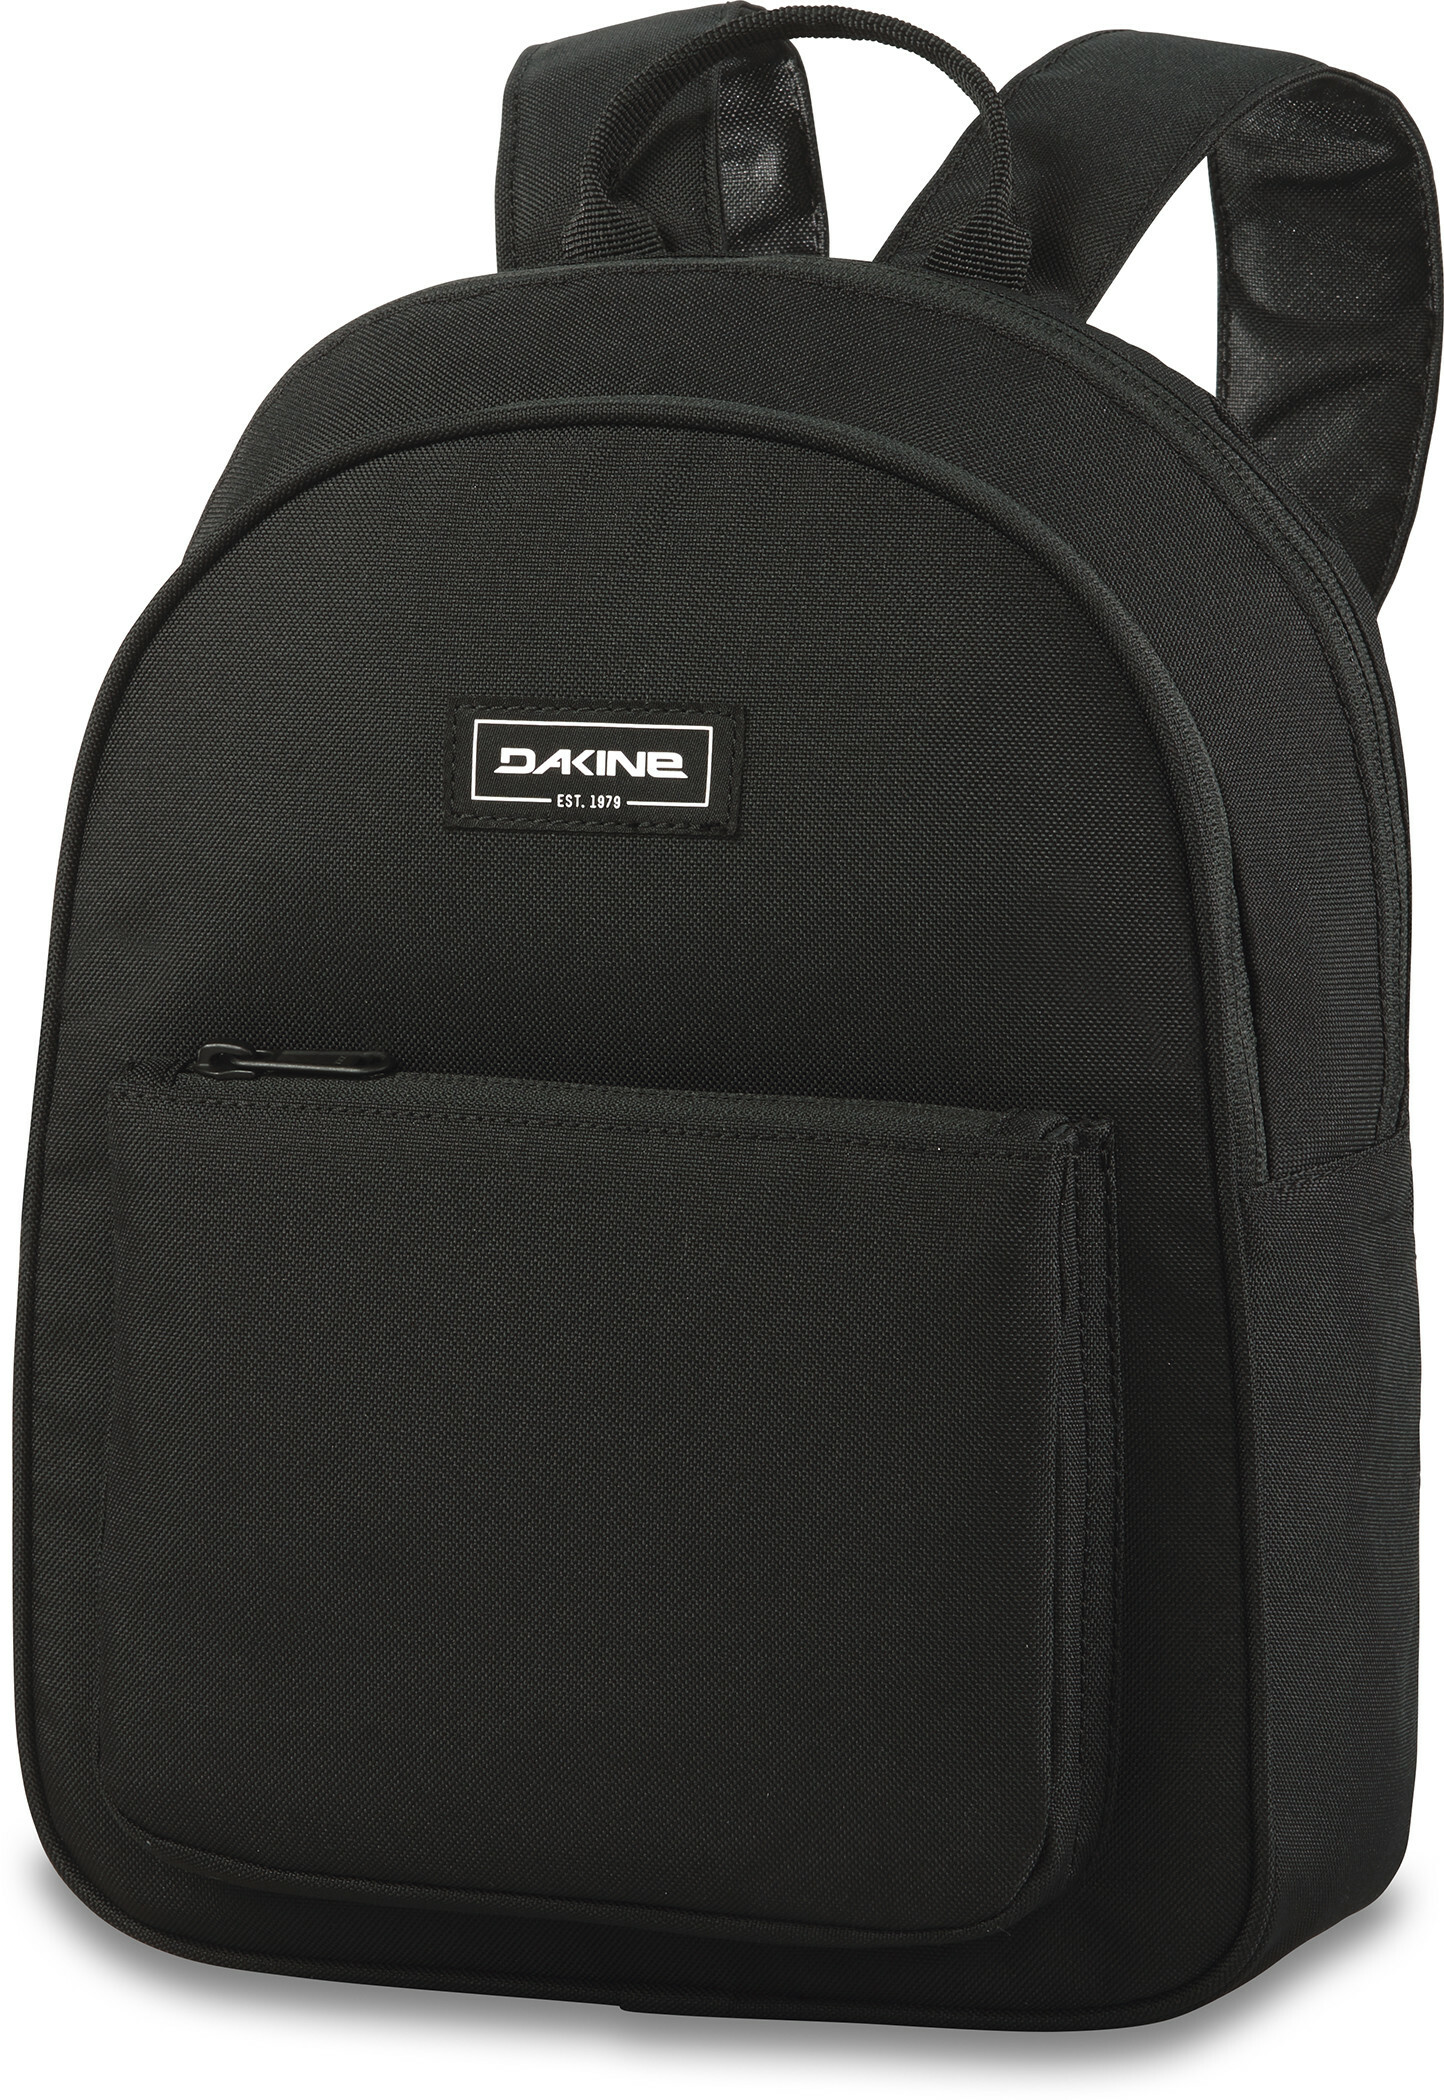 Rucksacks, backpacks and bags | Dakine Europe